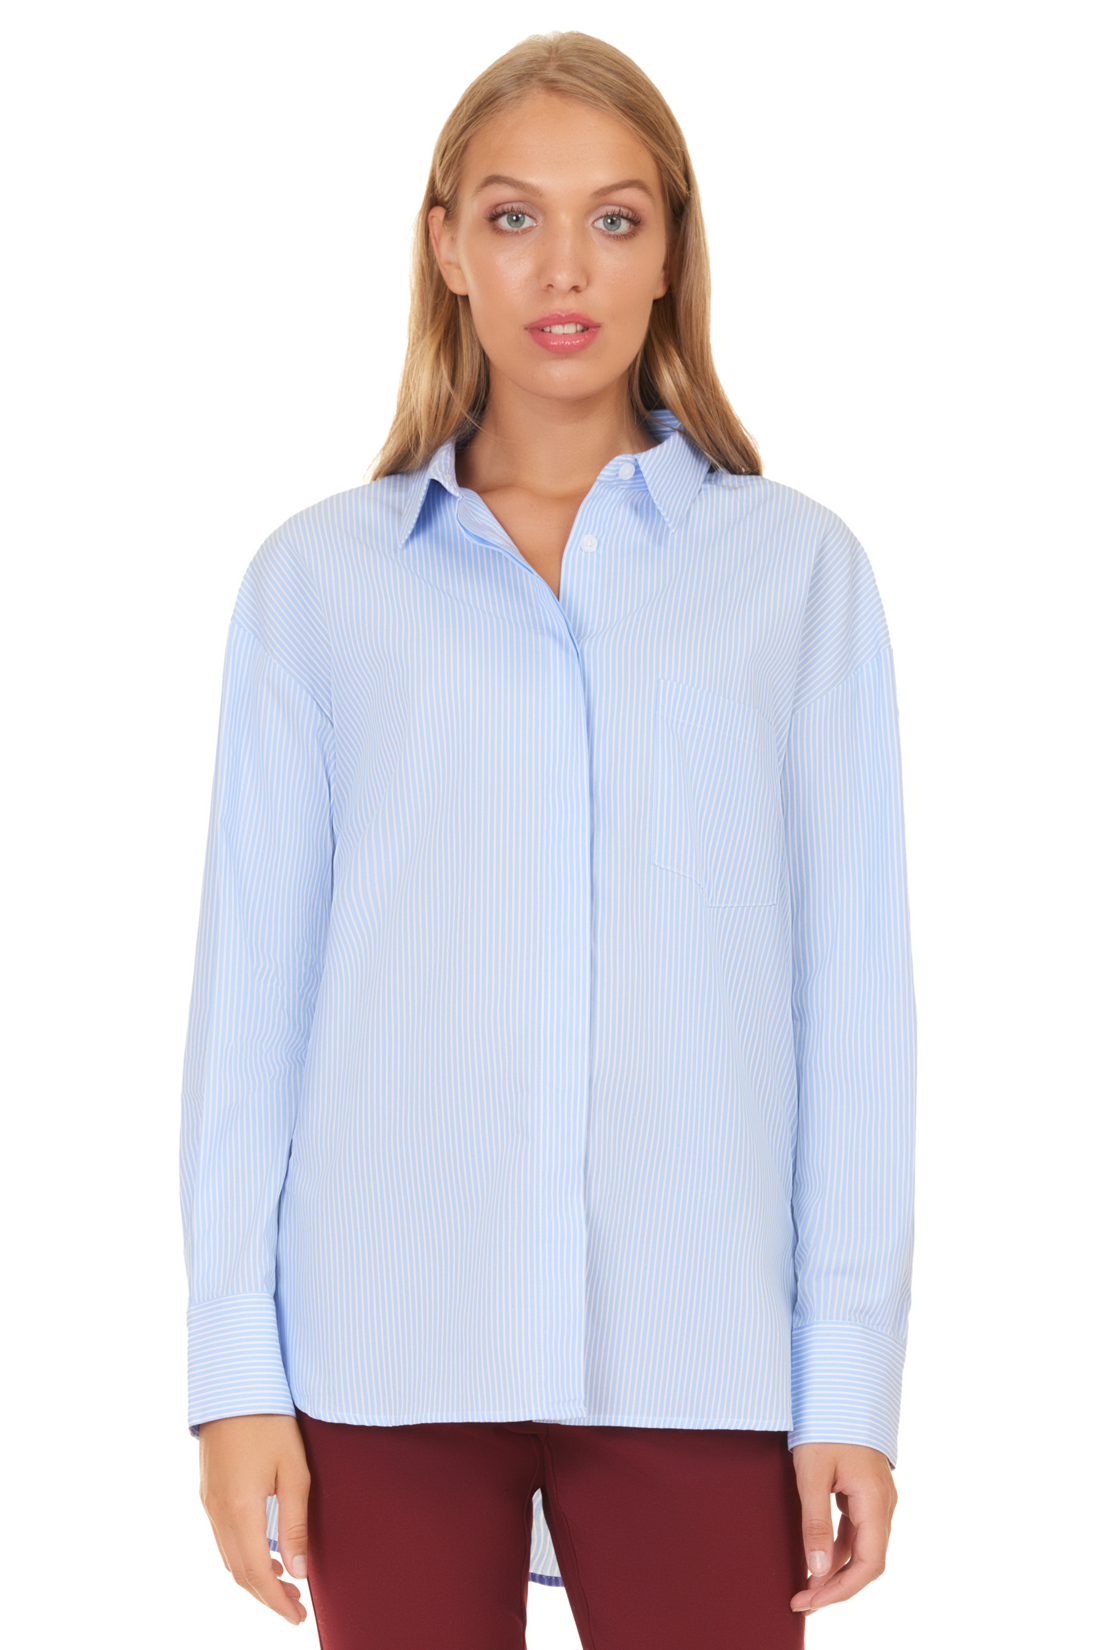 Прямая рубашка в полоску (арт. baon B177516), размер L, цвет белый Прямая рубашка в полоску (арт. baon B177516) - фото 1